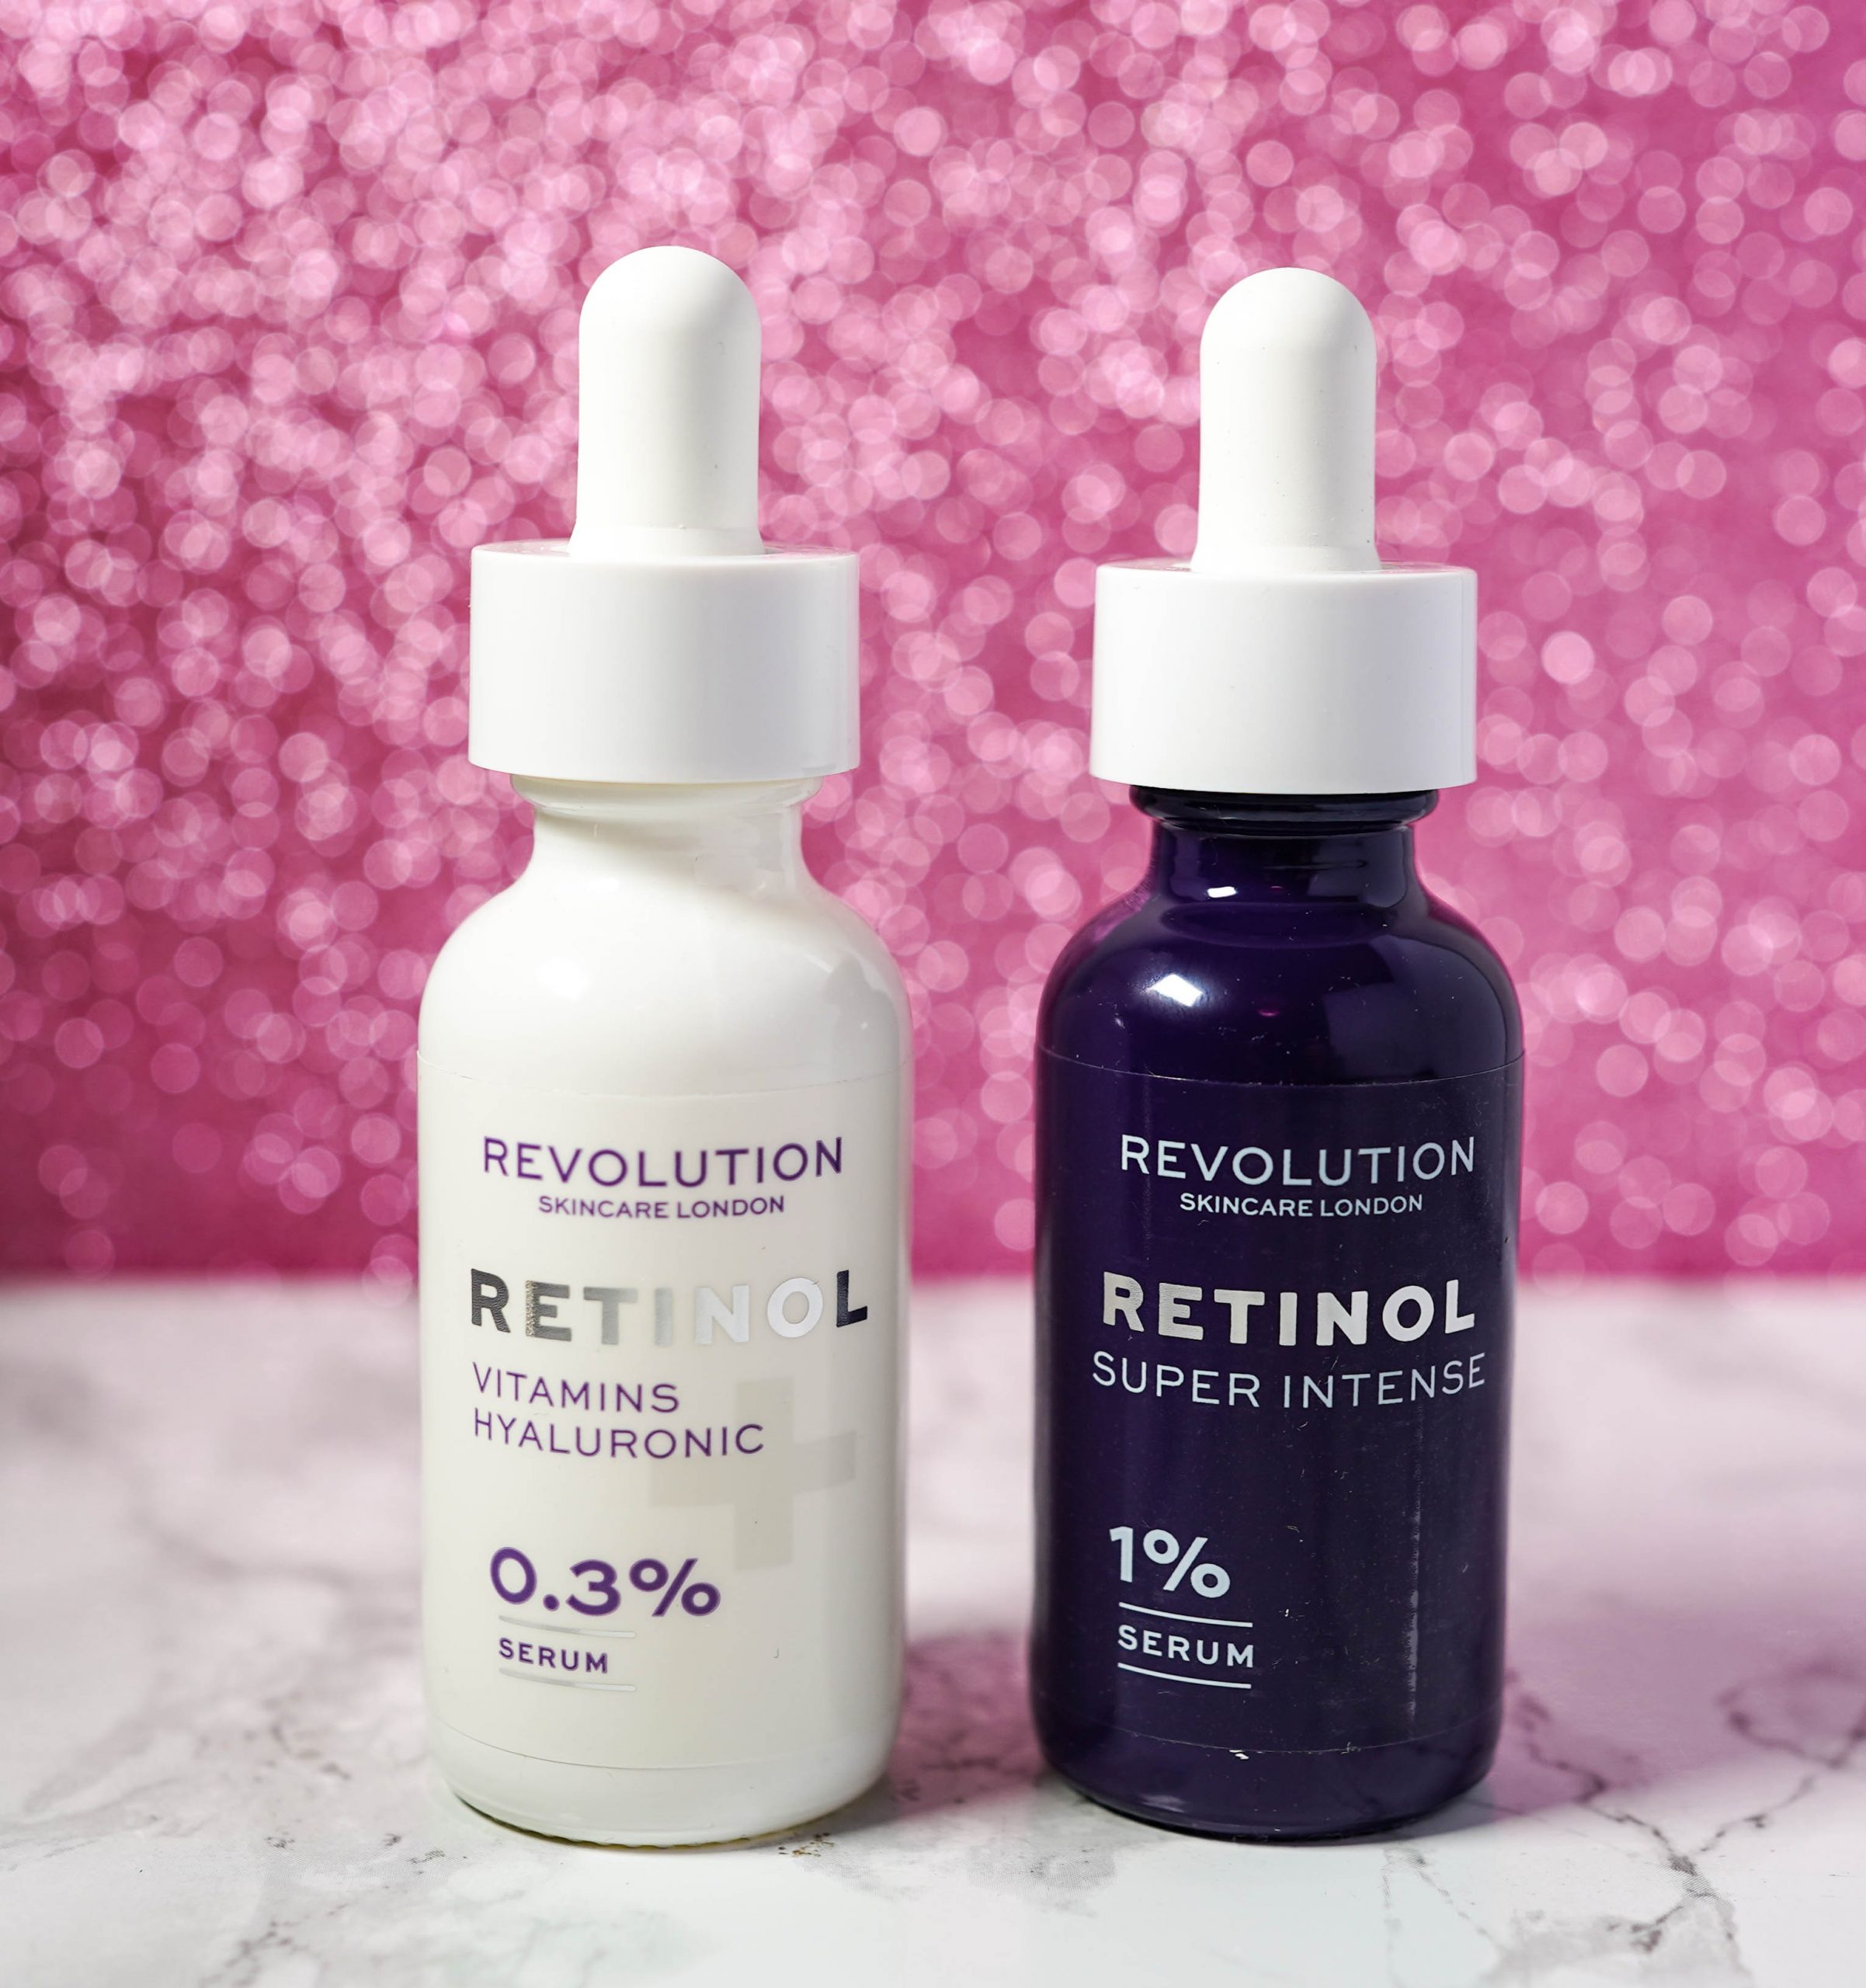 Two New Revolution Skincare Retinol Launches